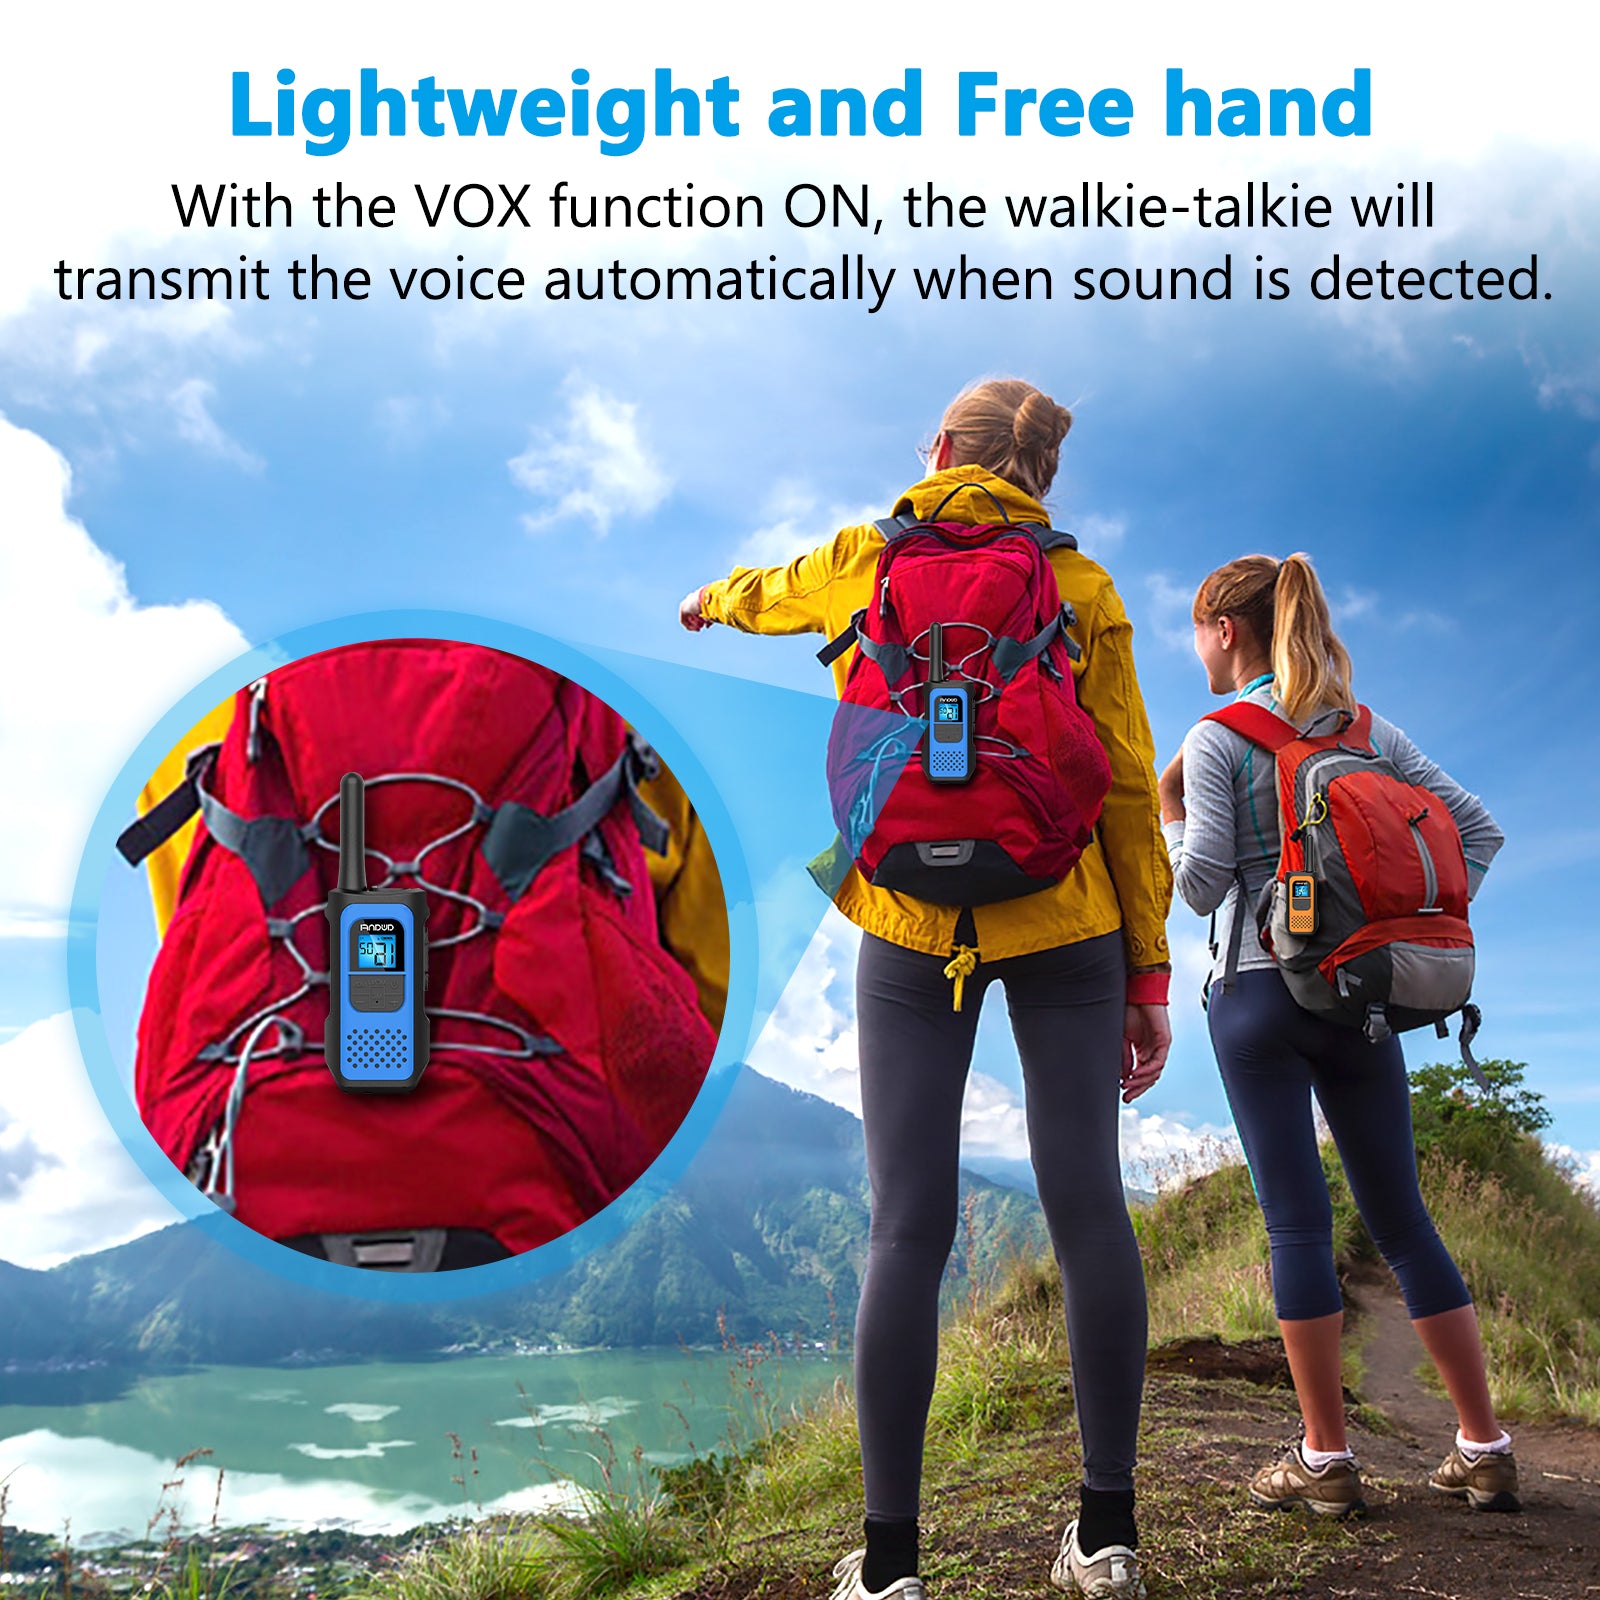 Talkies-walkies avec fonction VOX, portée 10 km WT-320 - Talkie